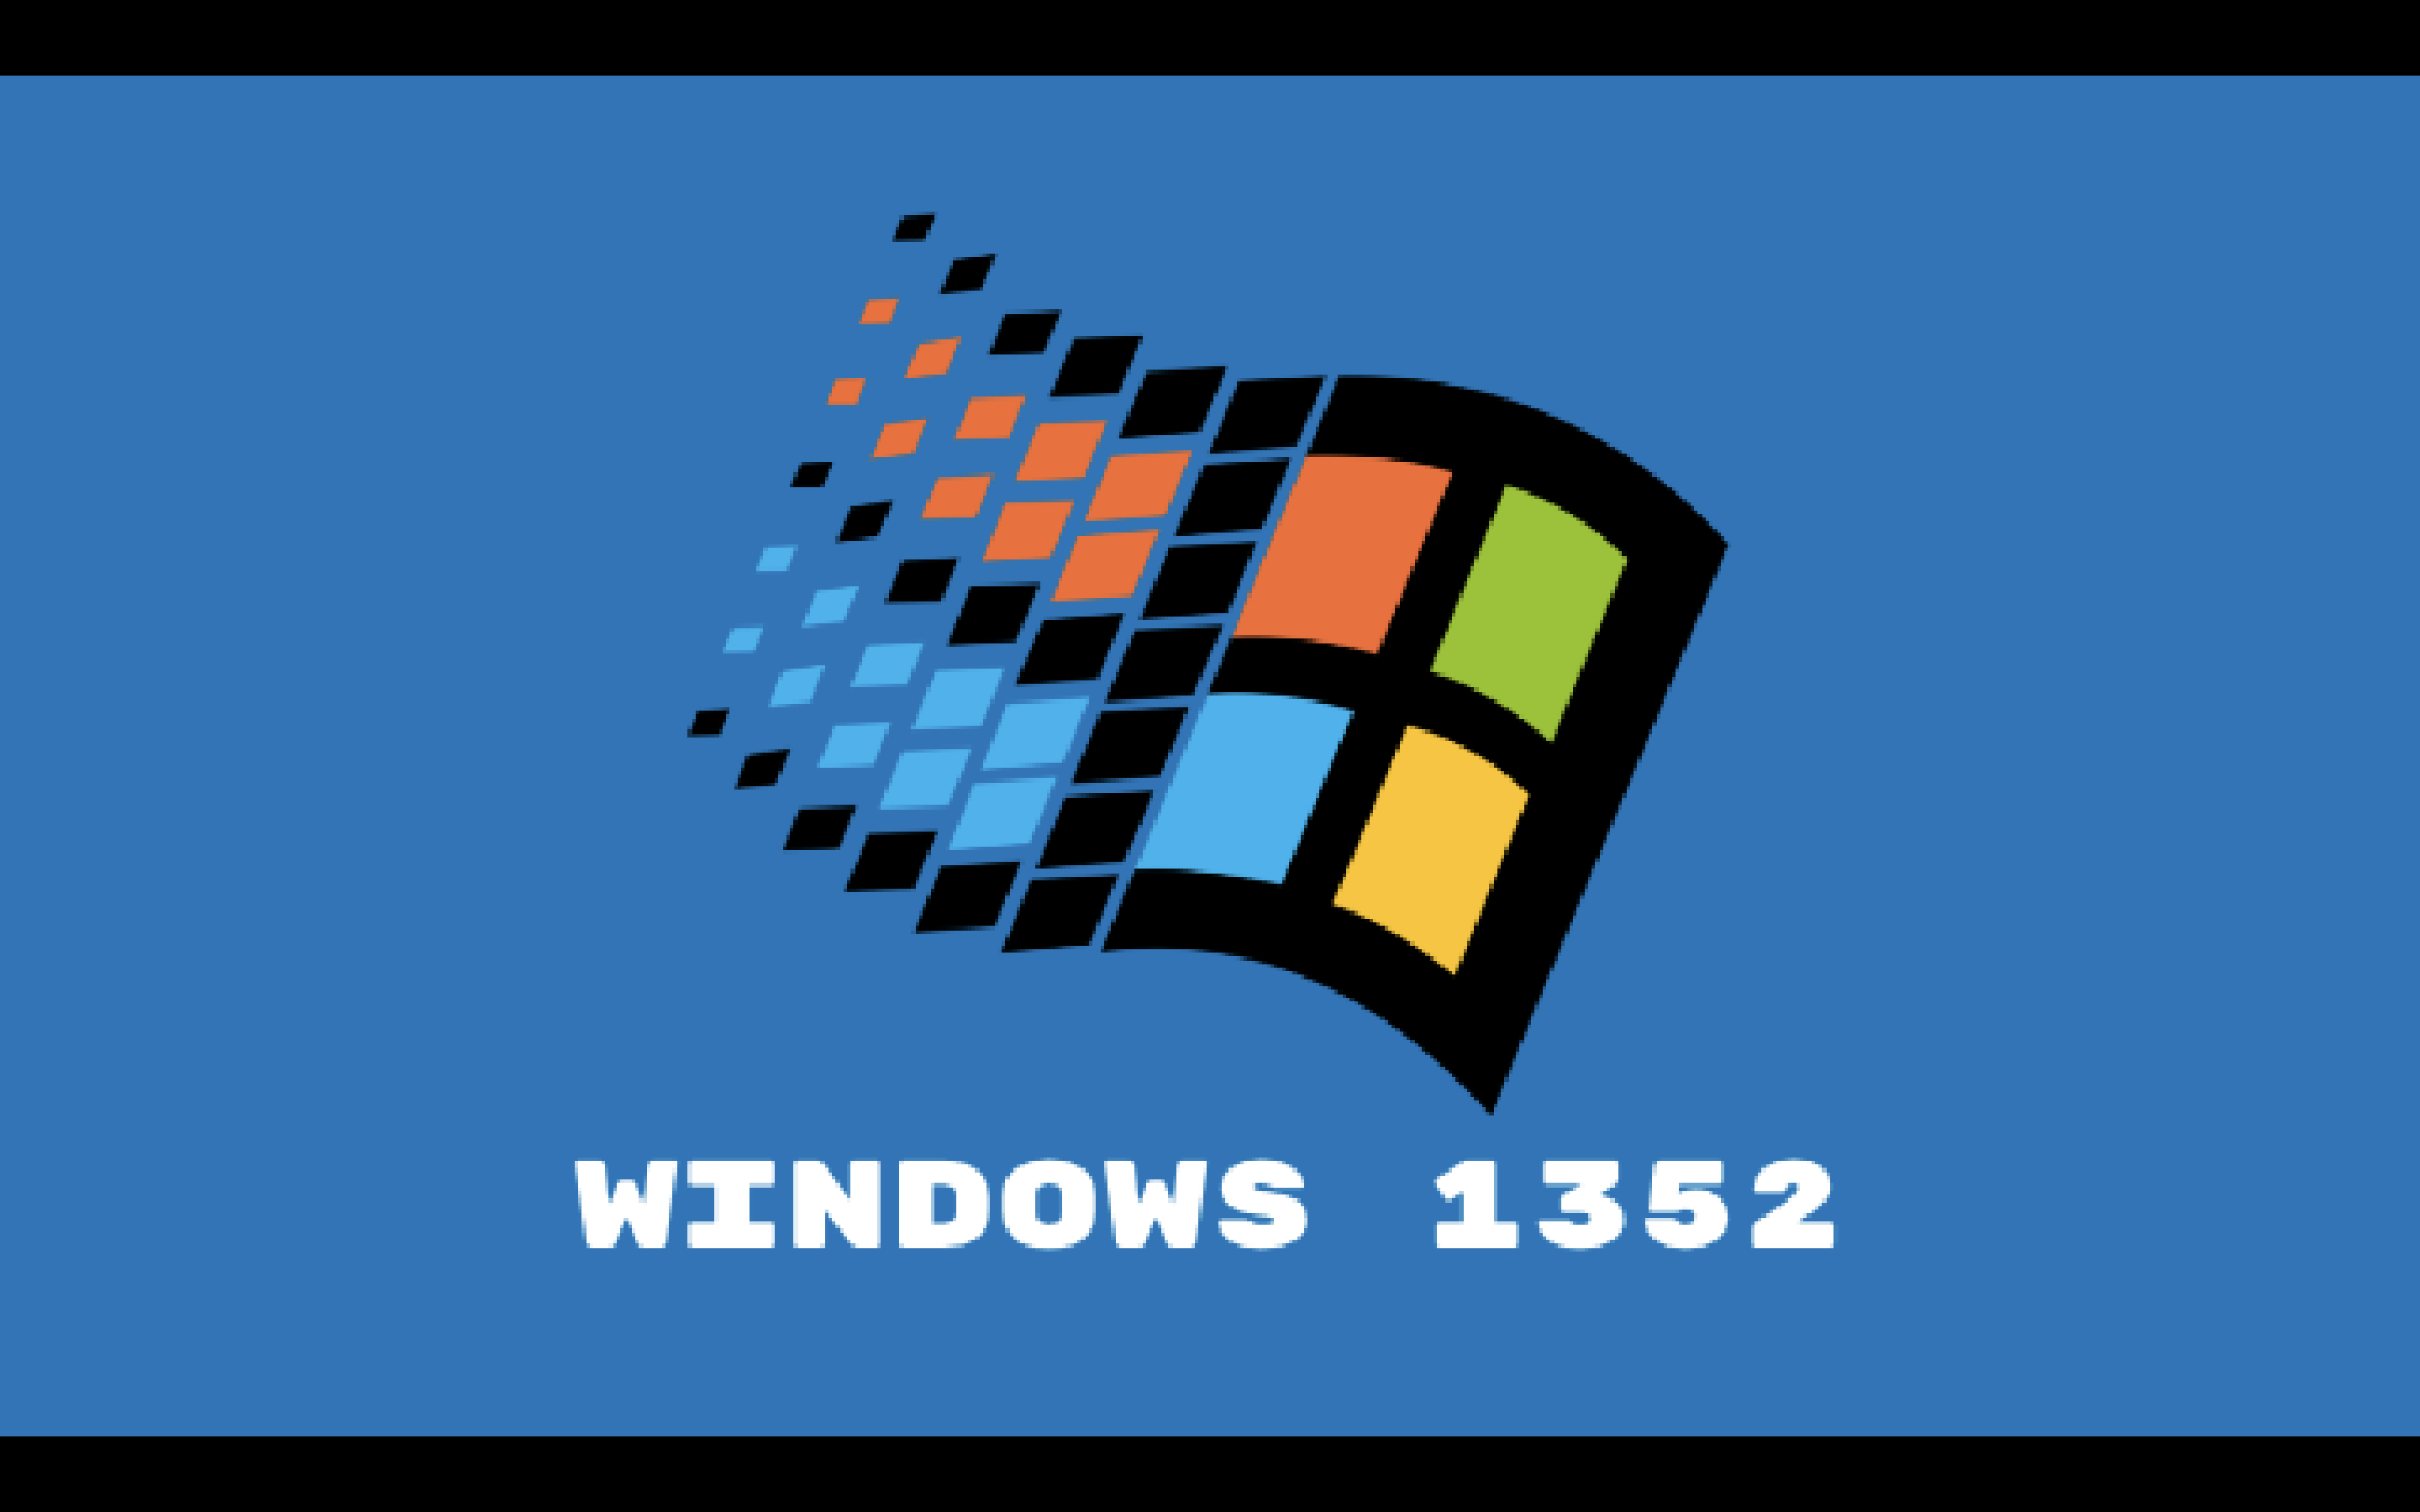 Windows 1352 Pong